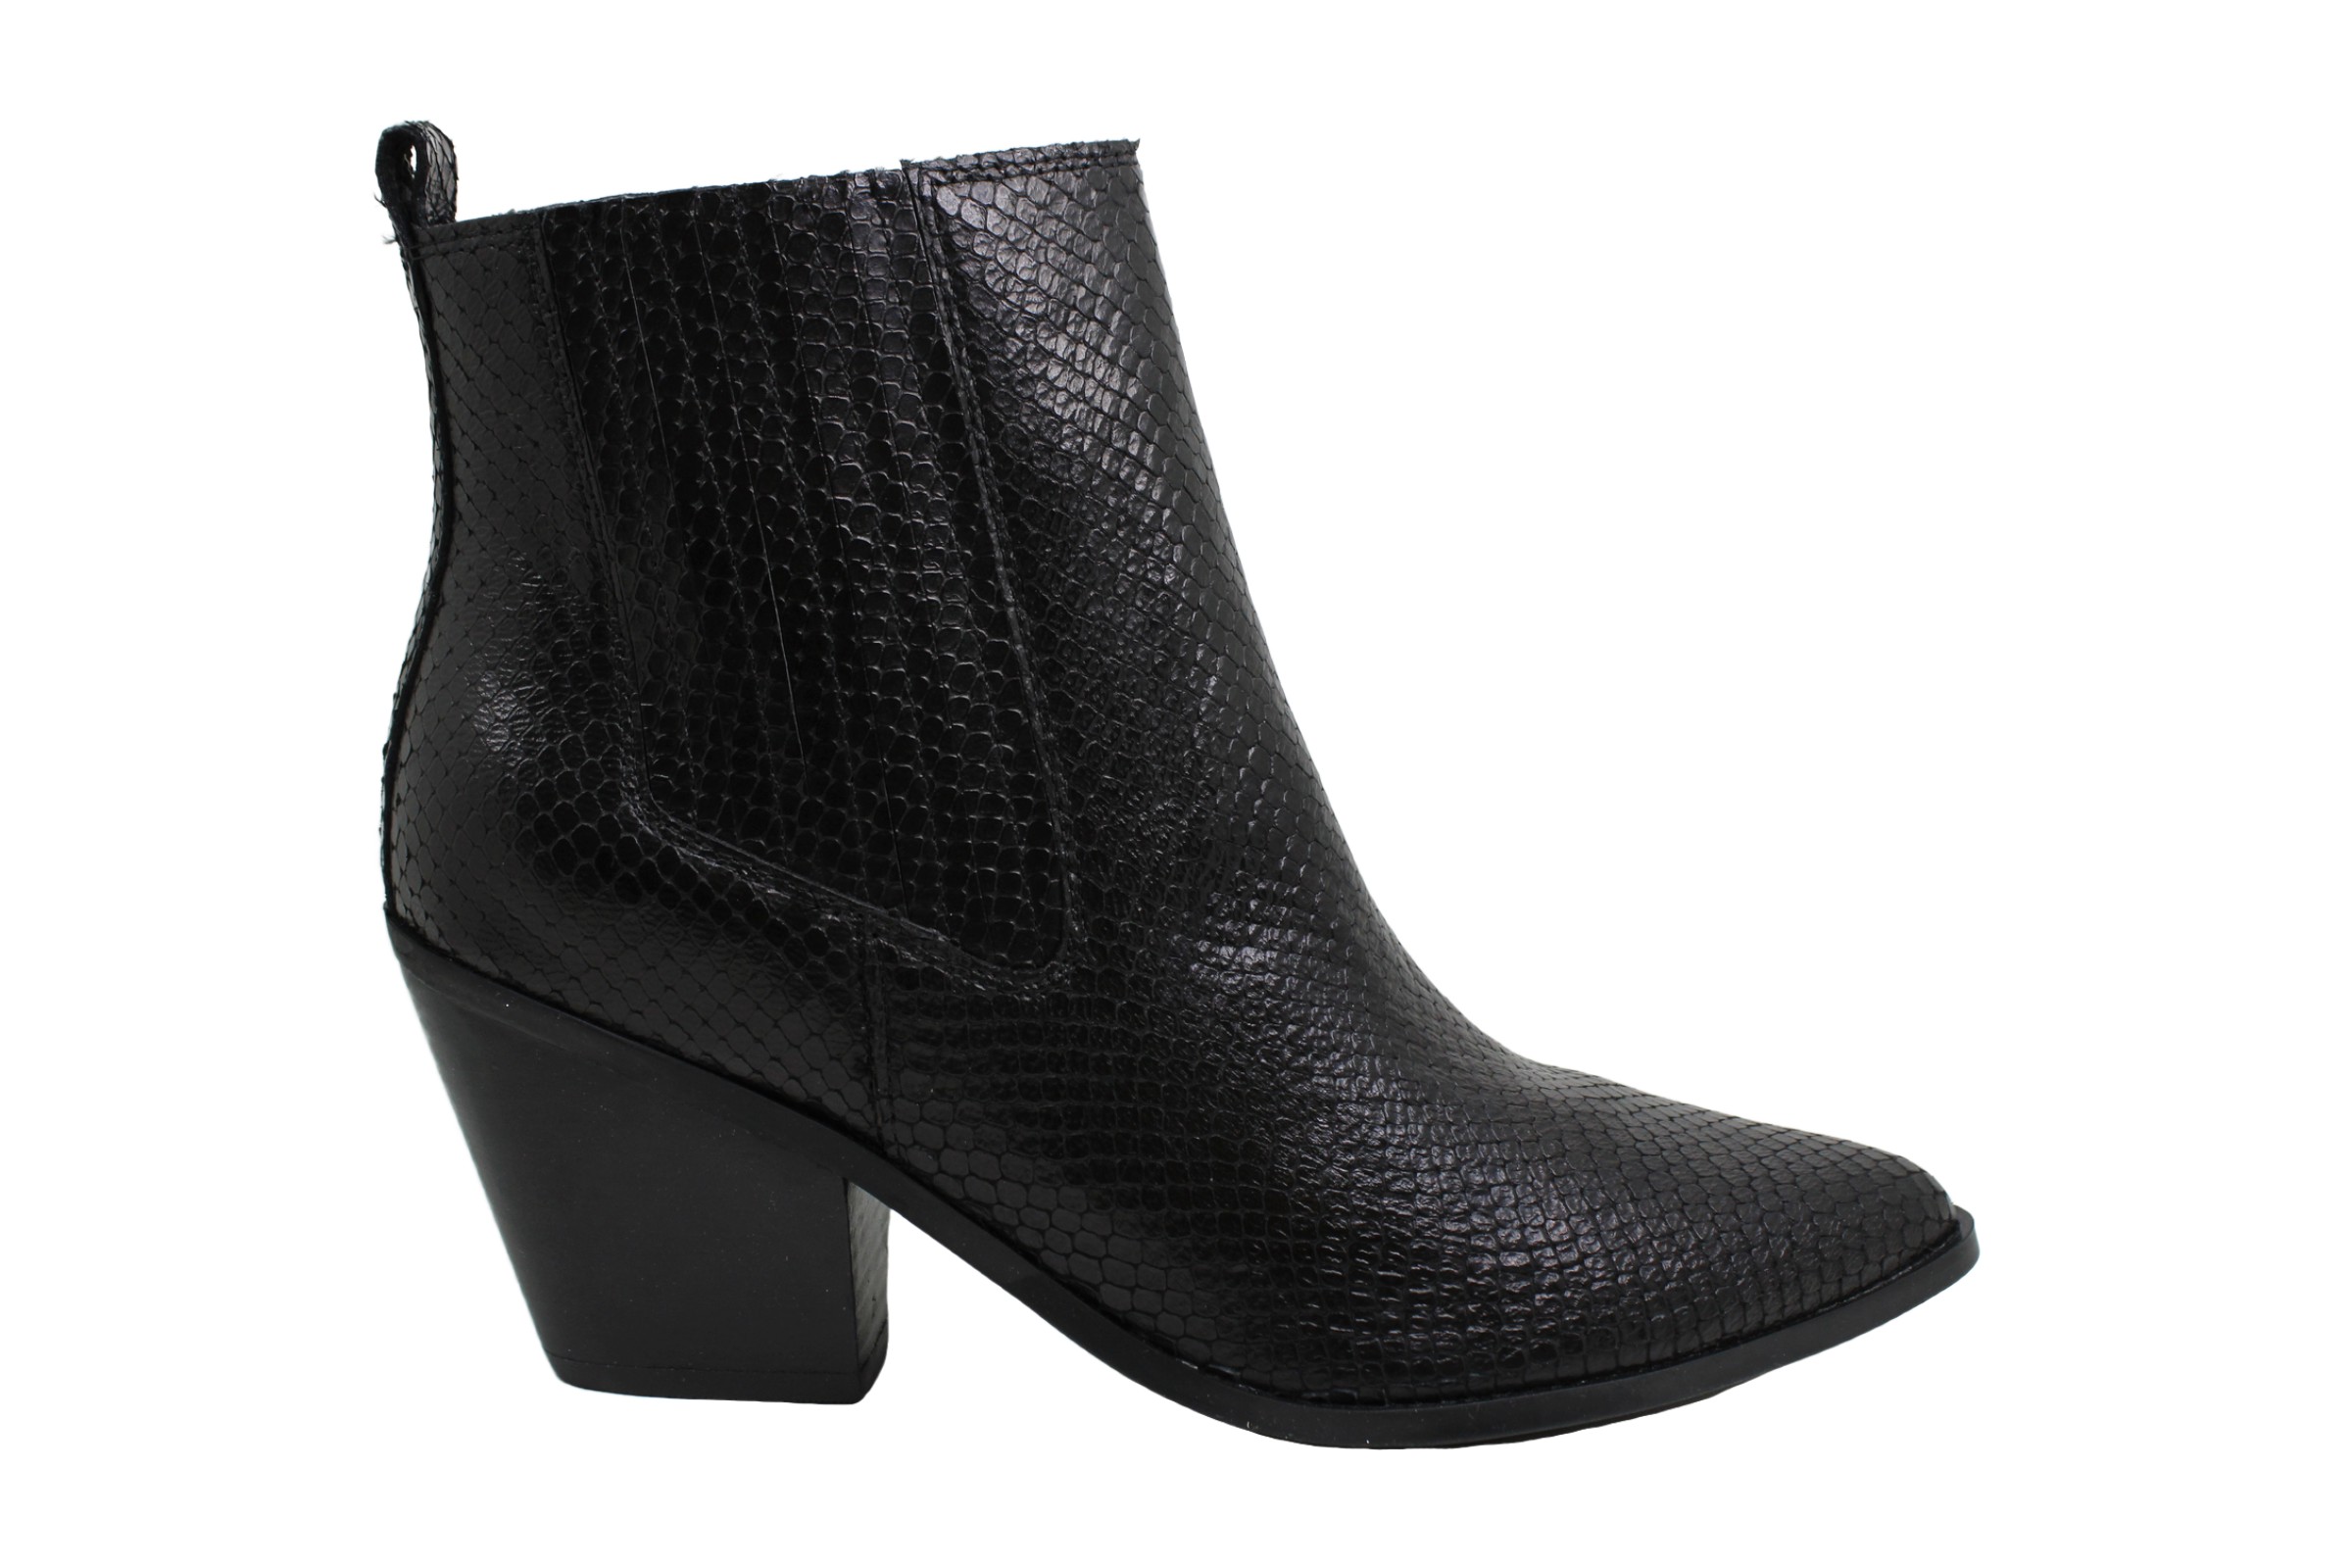 Nine West Womens Lexa Leather Pointed Toe Ankle Fashion Boots | eBay